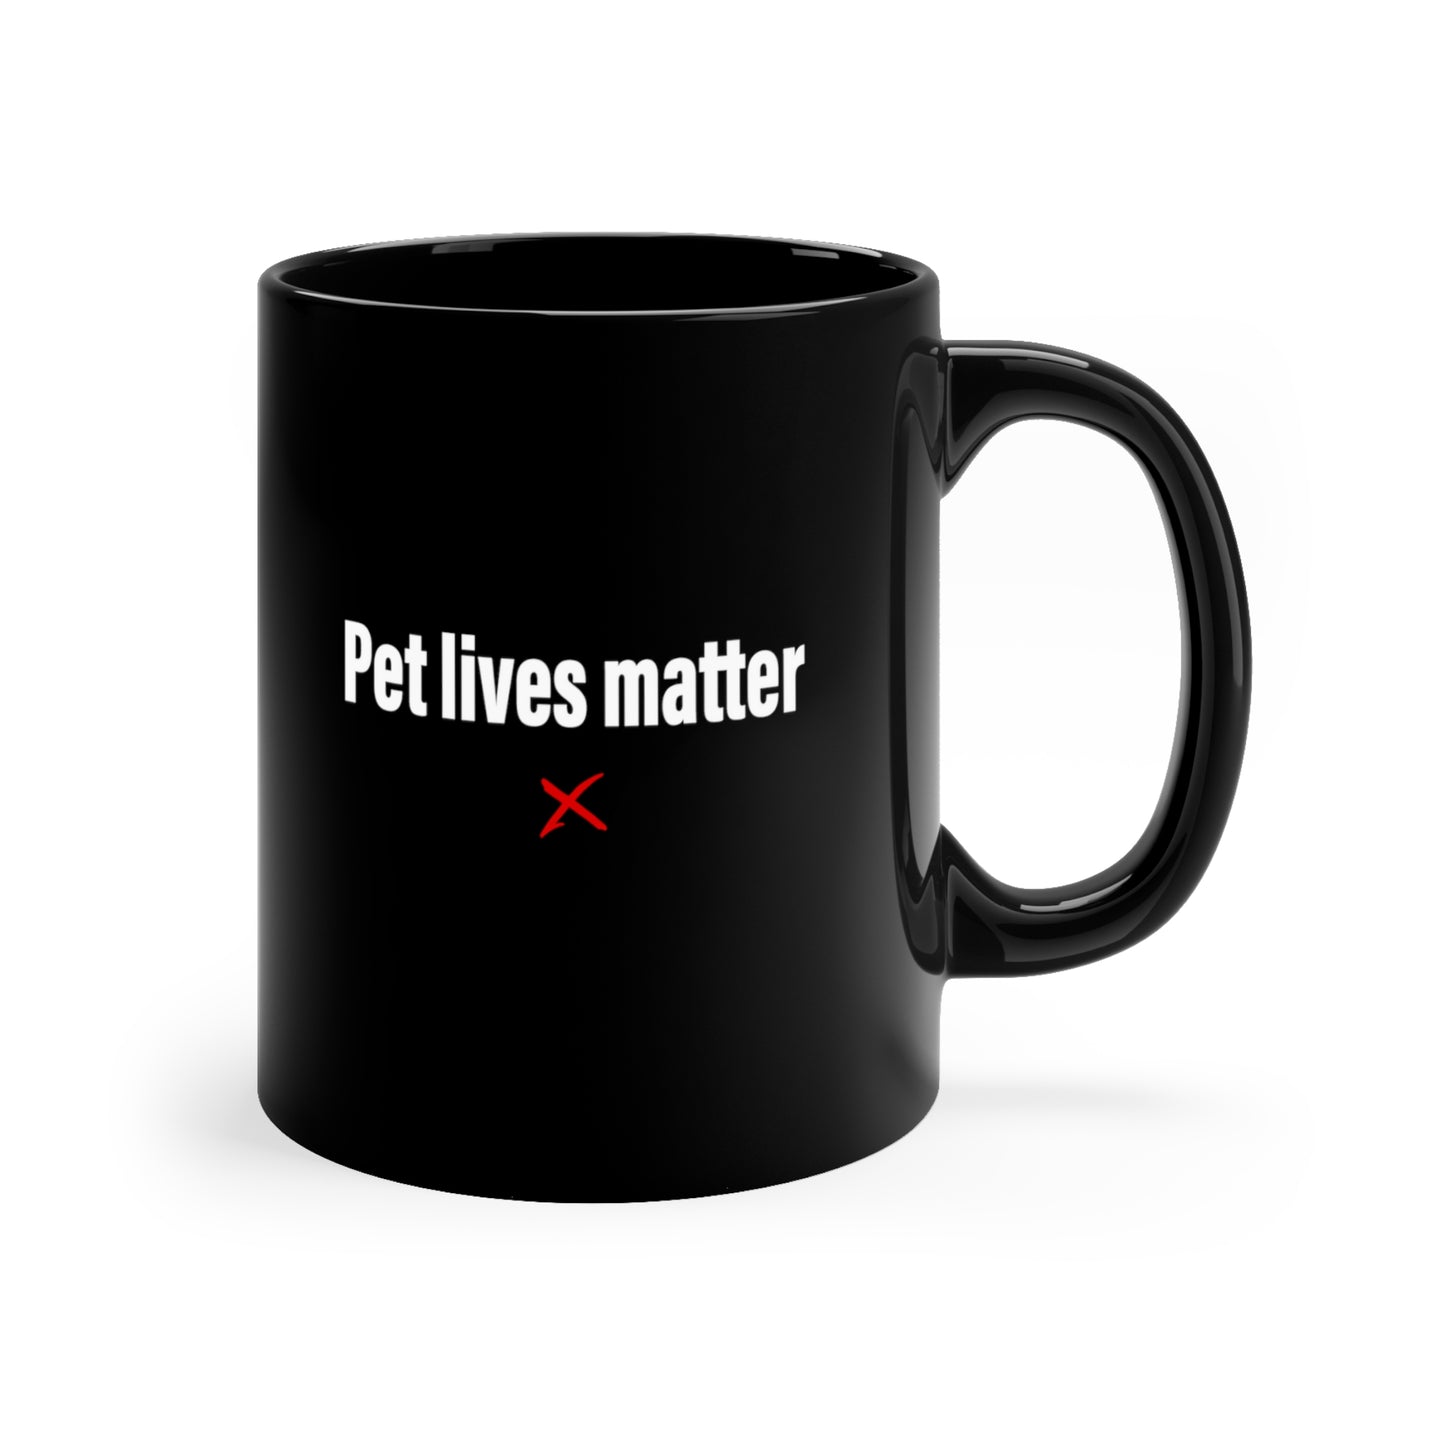 Pet lives matter - Mug